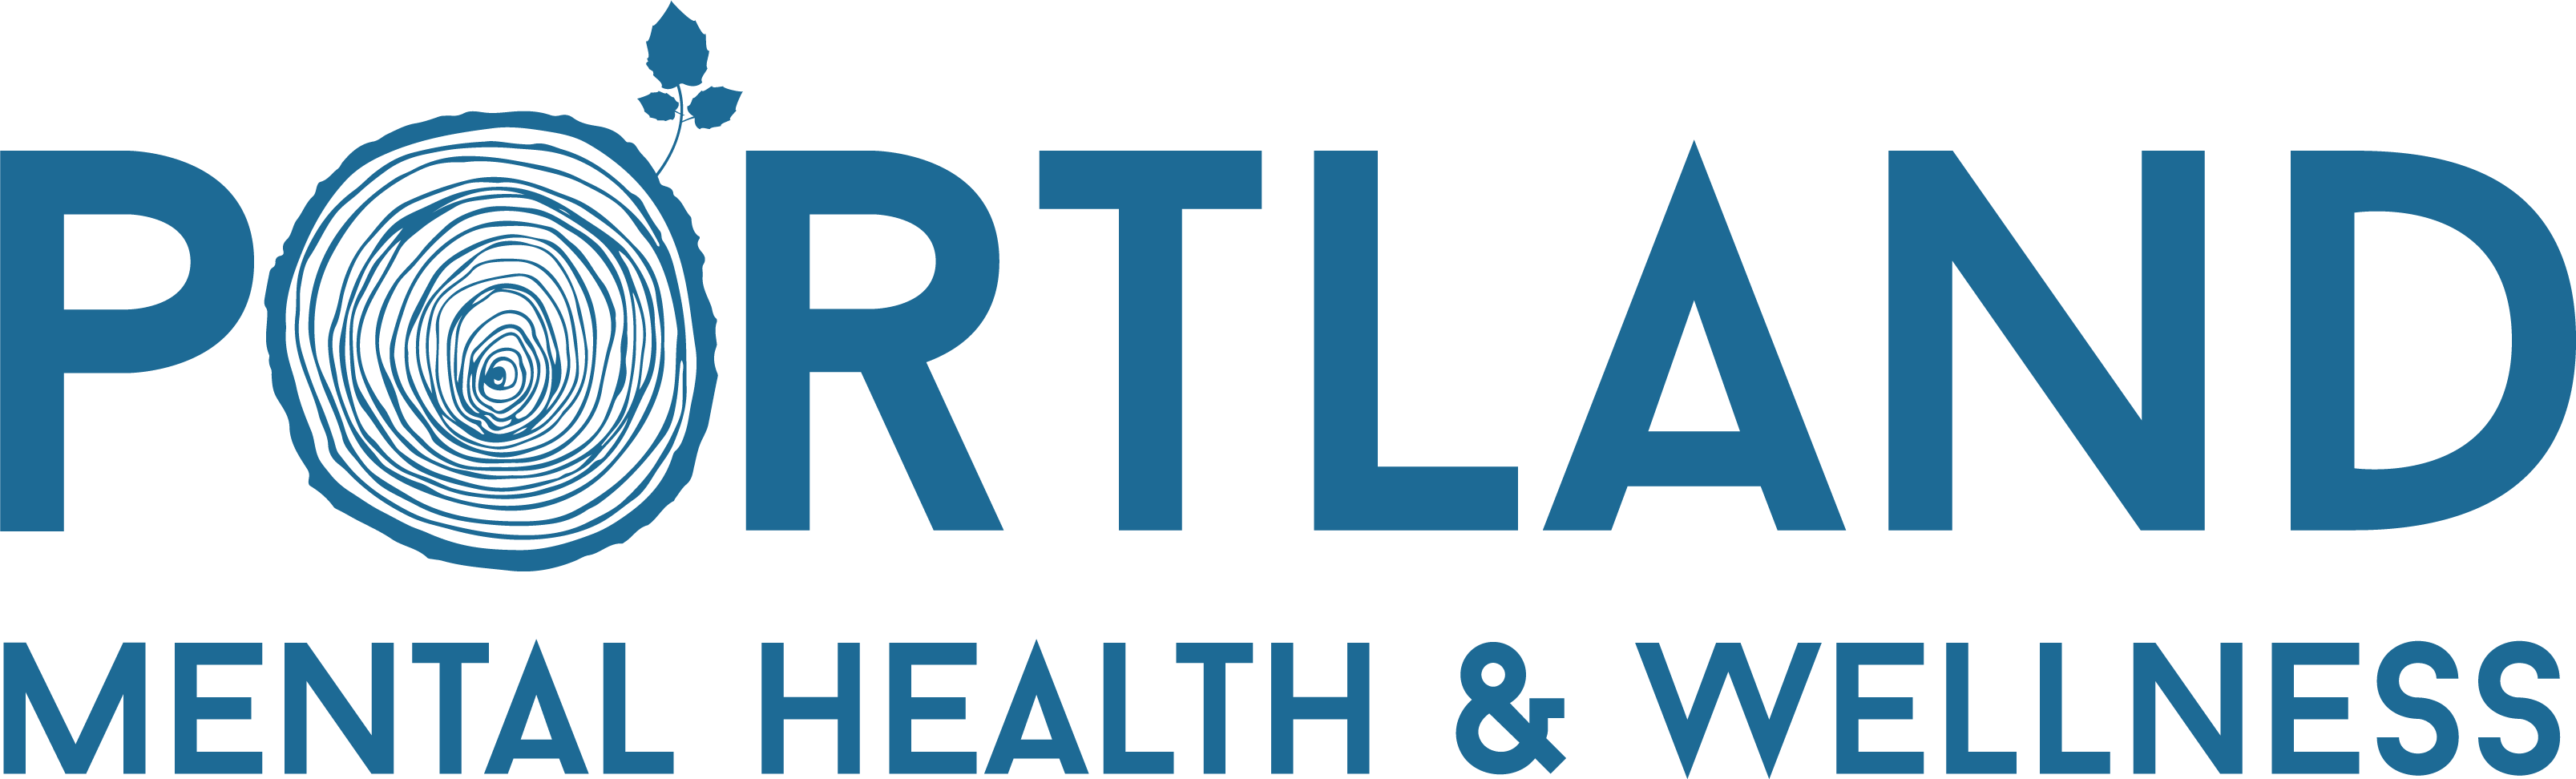 Portland Mental Health & Wellness logo